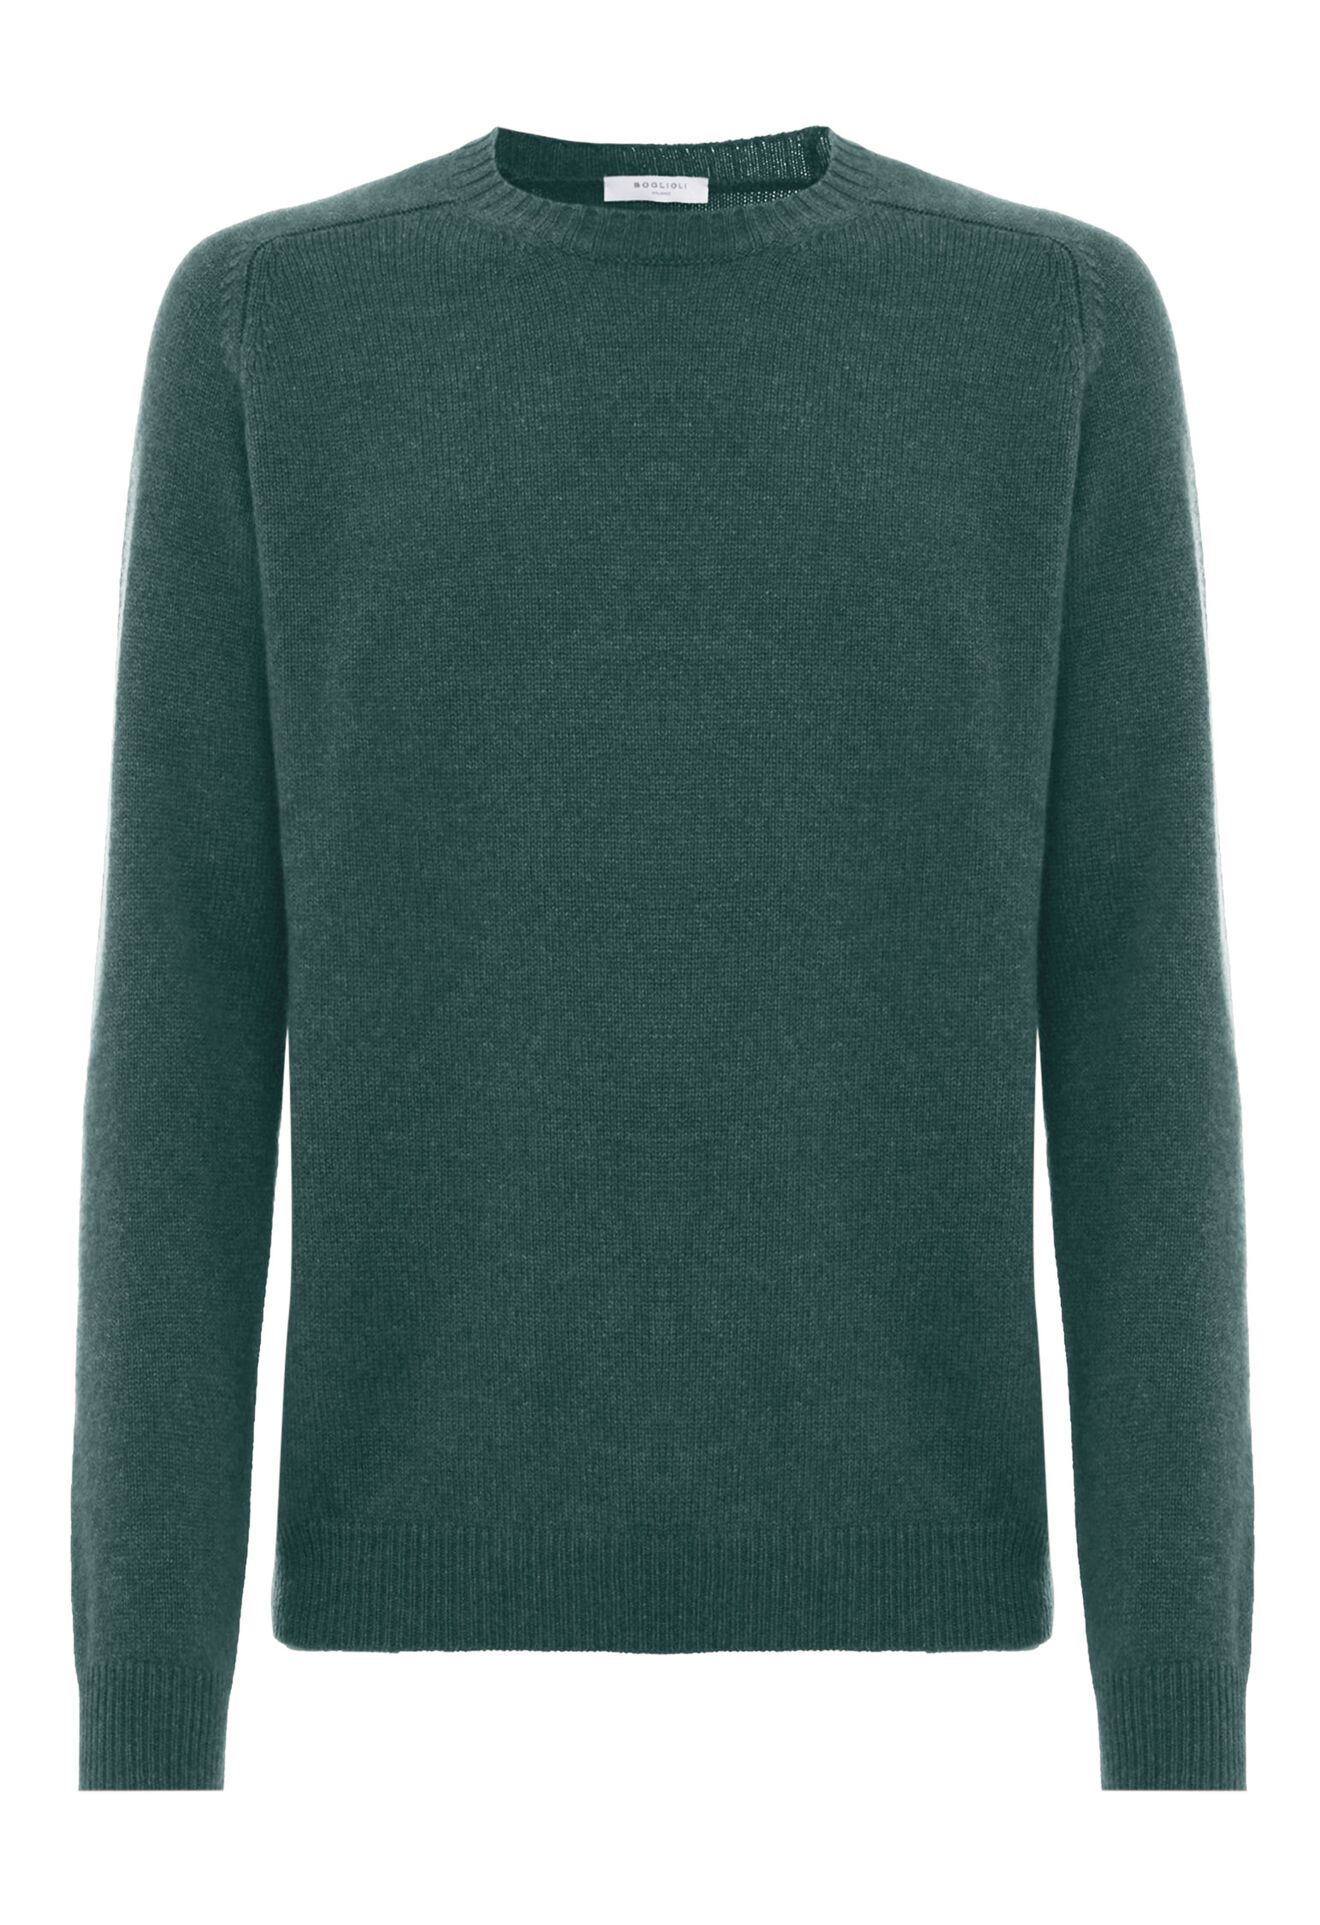 Pure cashmere crewneck sweater in Green: Luxury Italian Knitwear for Men